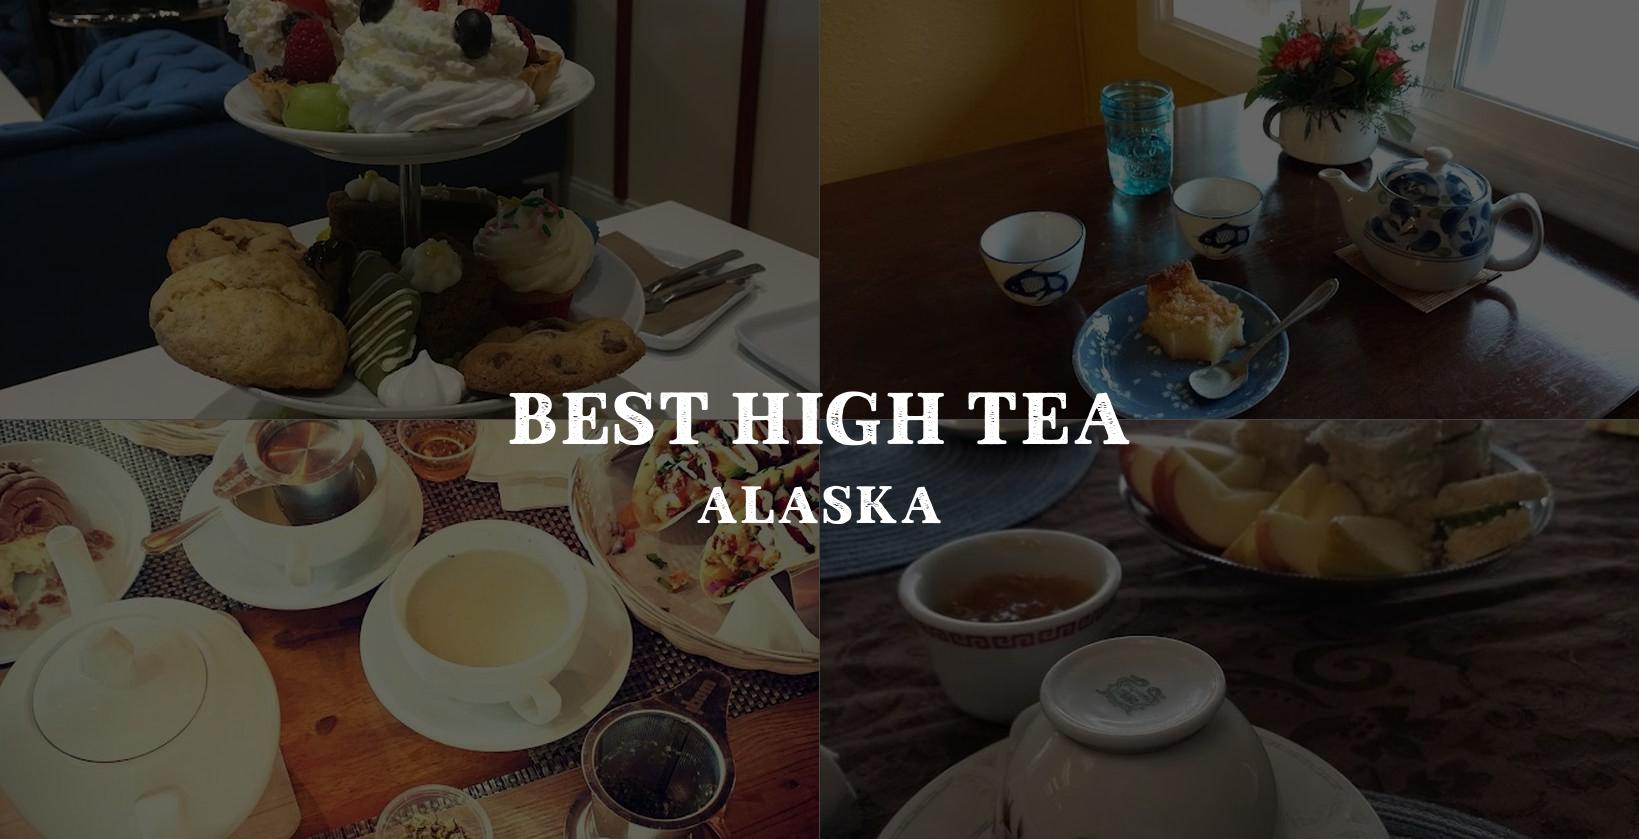 Choosing the perfect High Tea experience in Alaska